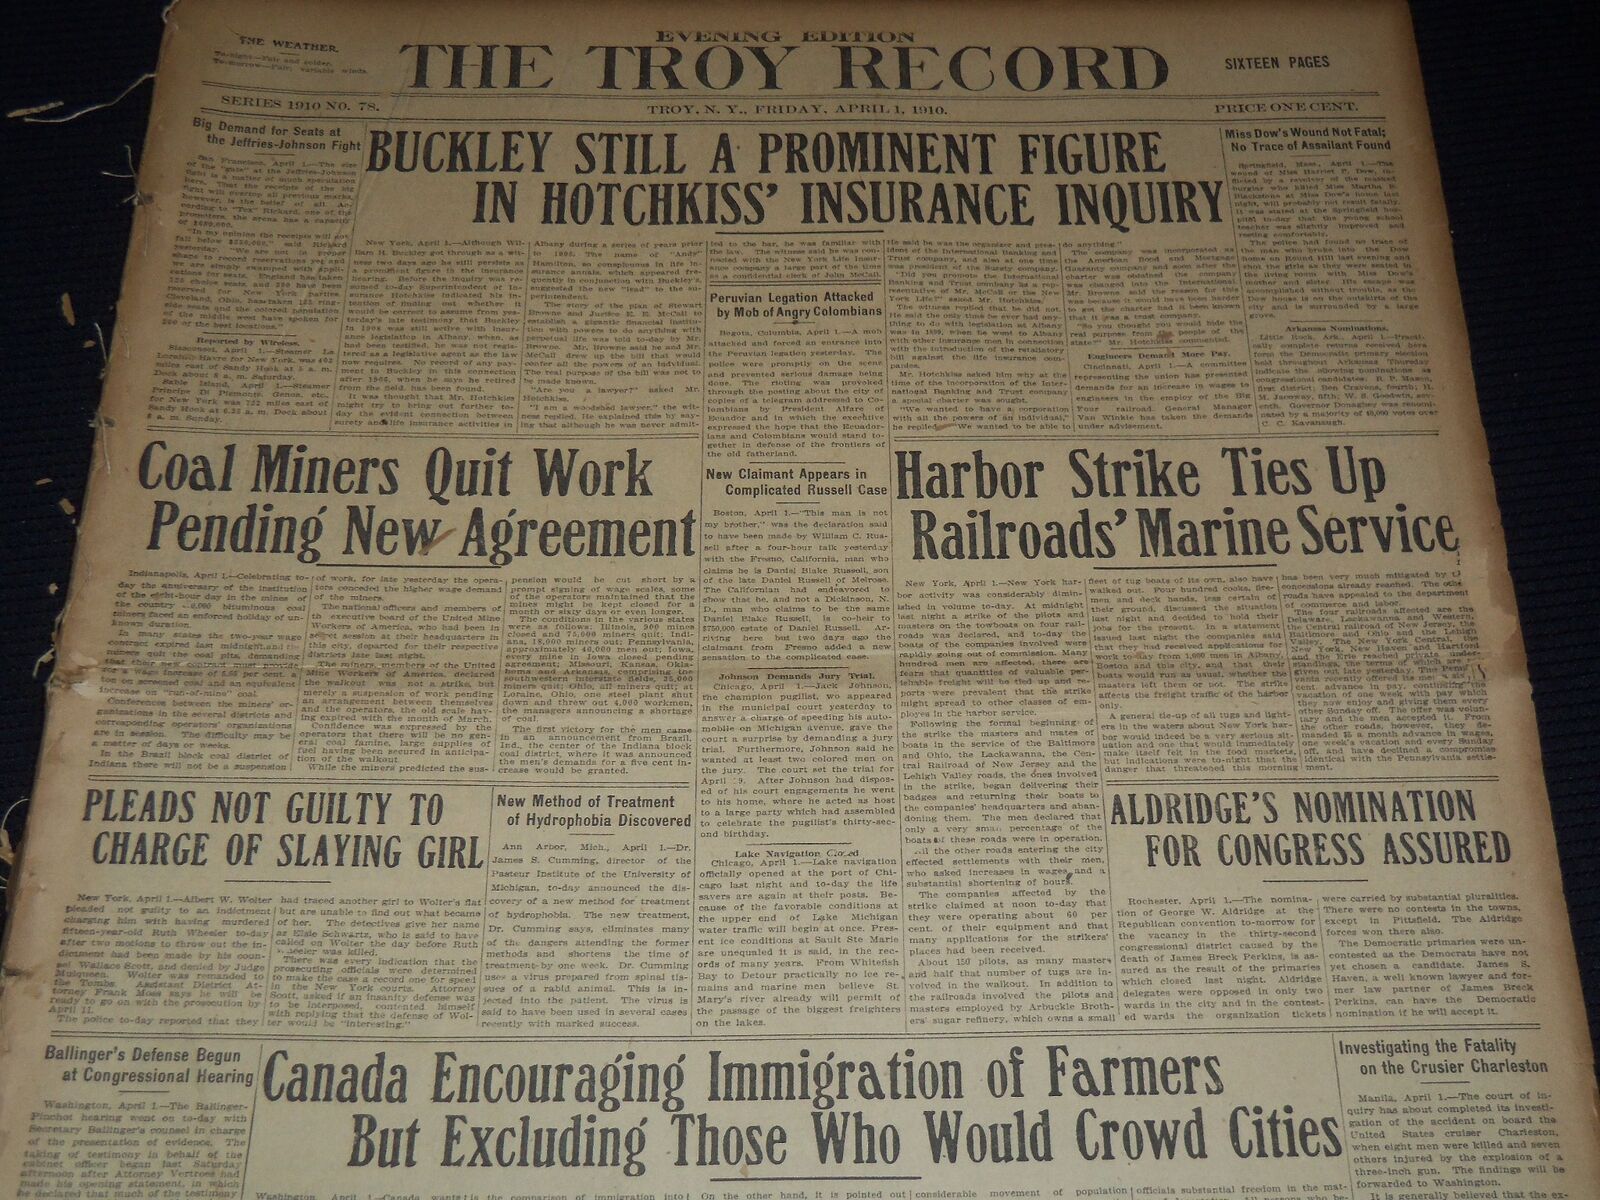 1910 APRIL 1-30 THE TROY RECORD NEWSPAPER BOUND VOLUME - NEW YORK - NTL 113